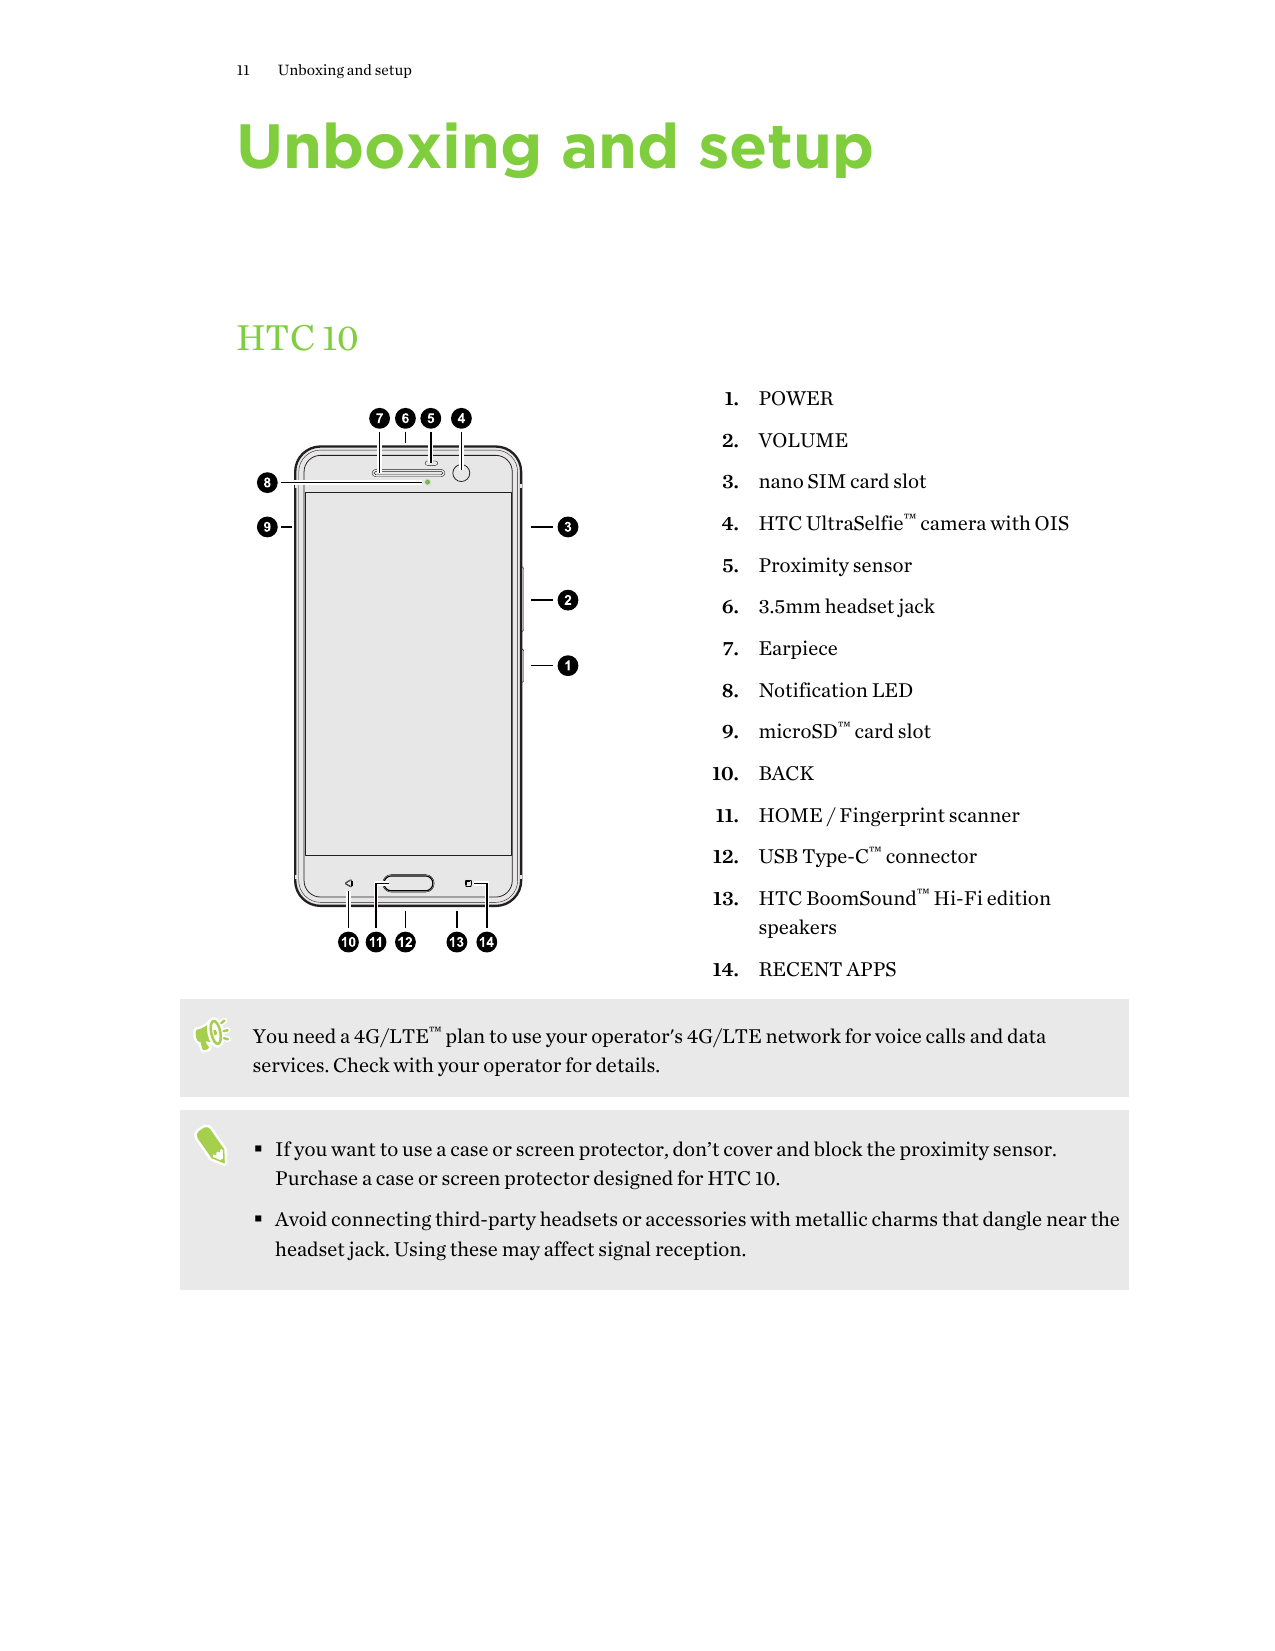 11Unboxing and setupUnboxing and setupHTC 101. POWER2. VOLUME3. nano SIM card slot4. HTC UltraSelfie™ camera with OIS5. Proximit